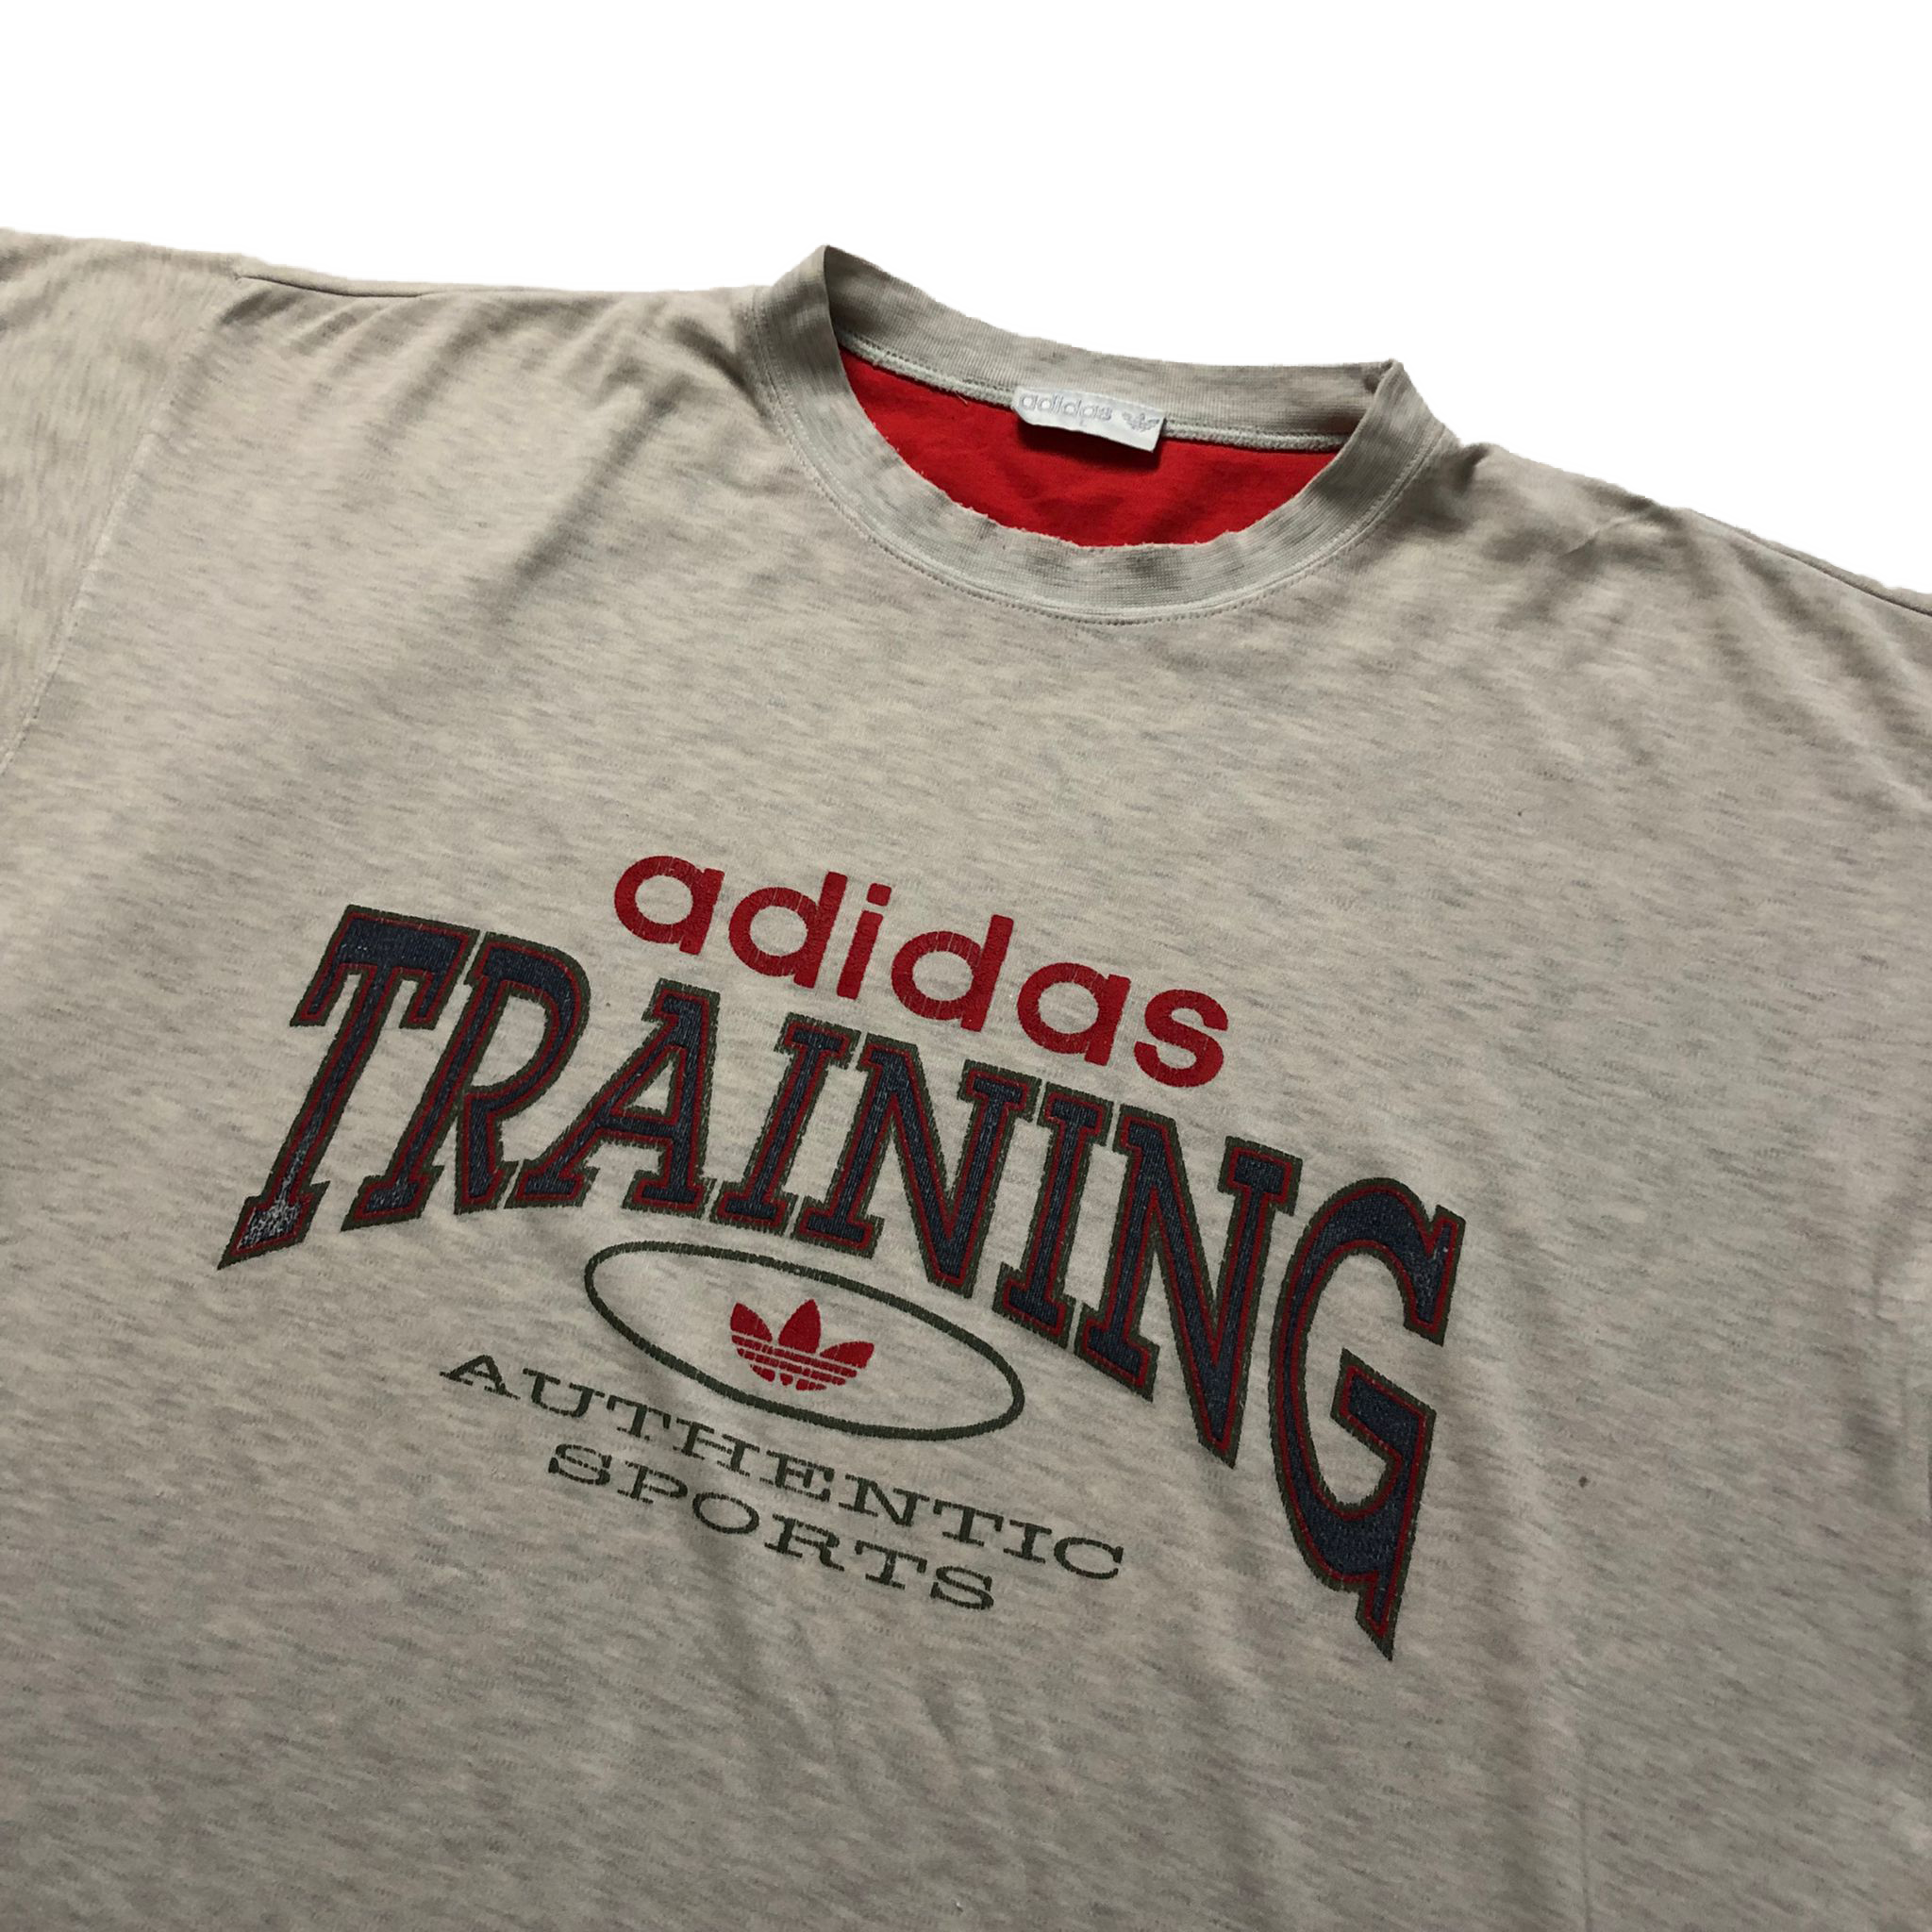 90's Adidas Training t-shirt